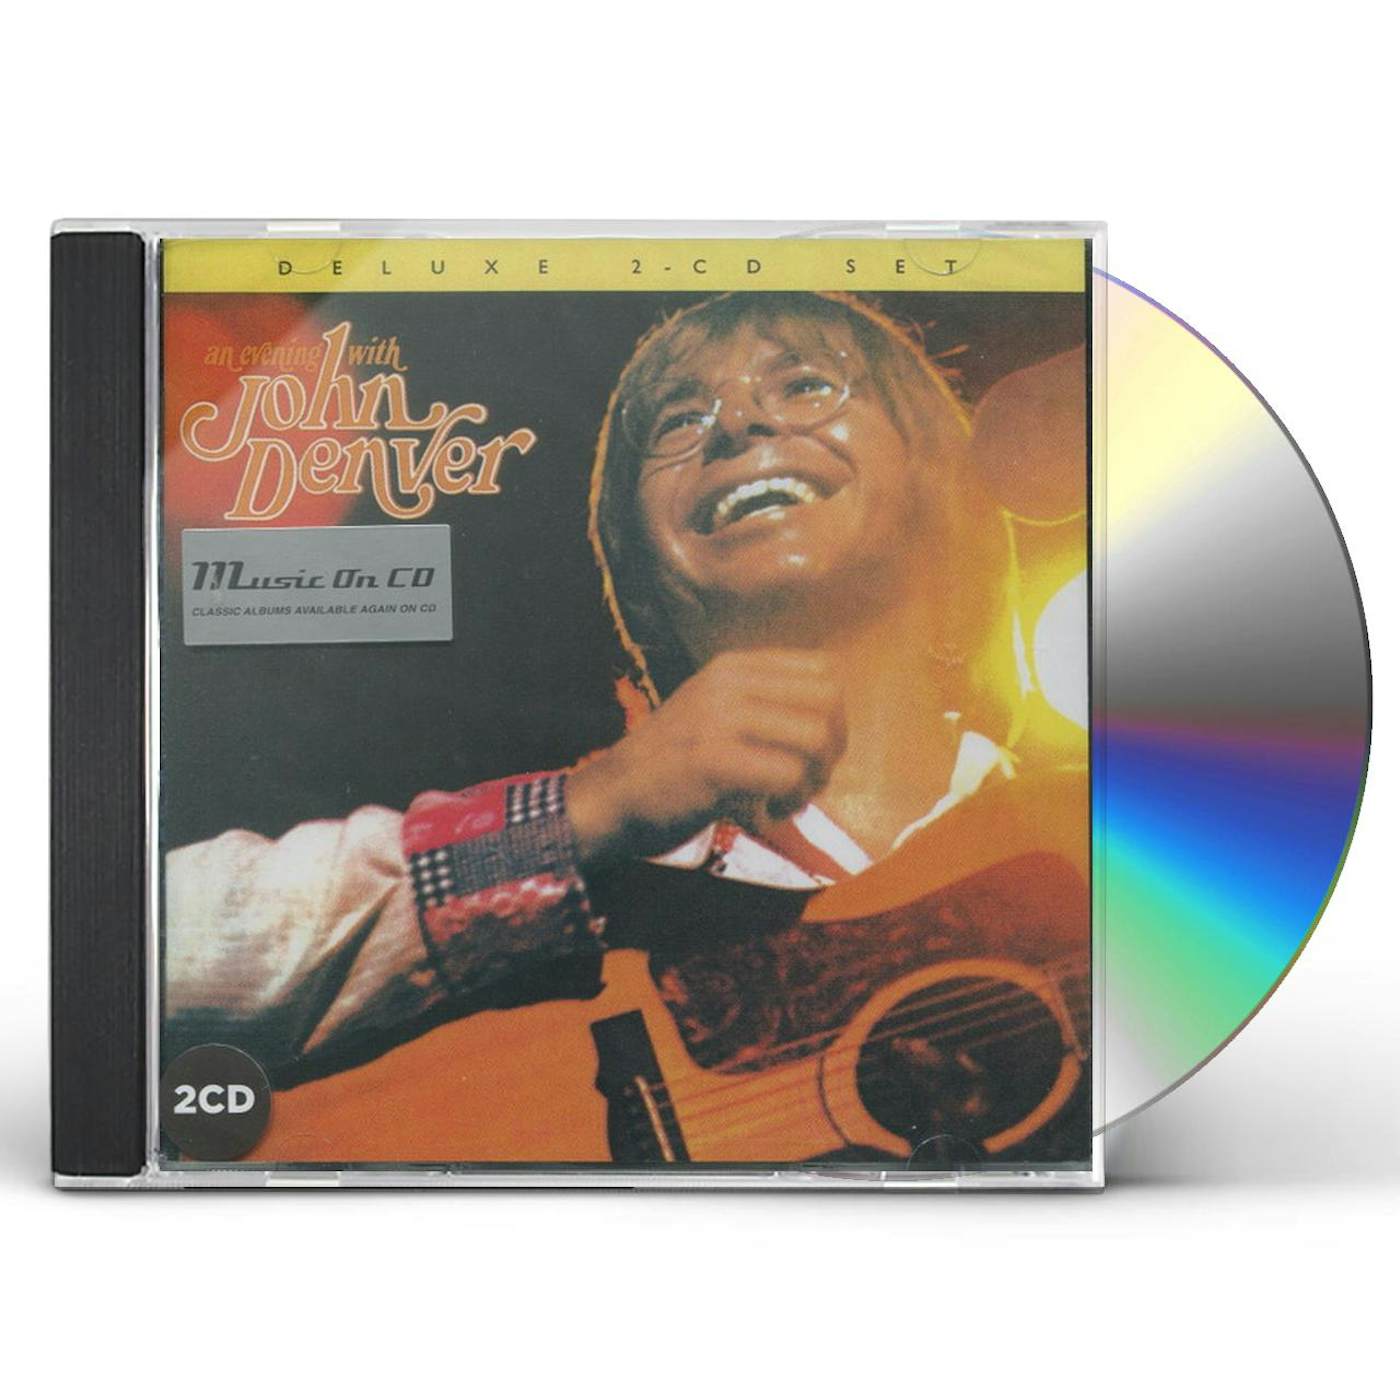 John Denver AN EVENING WITH (2CD/IMPORT) CD